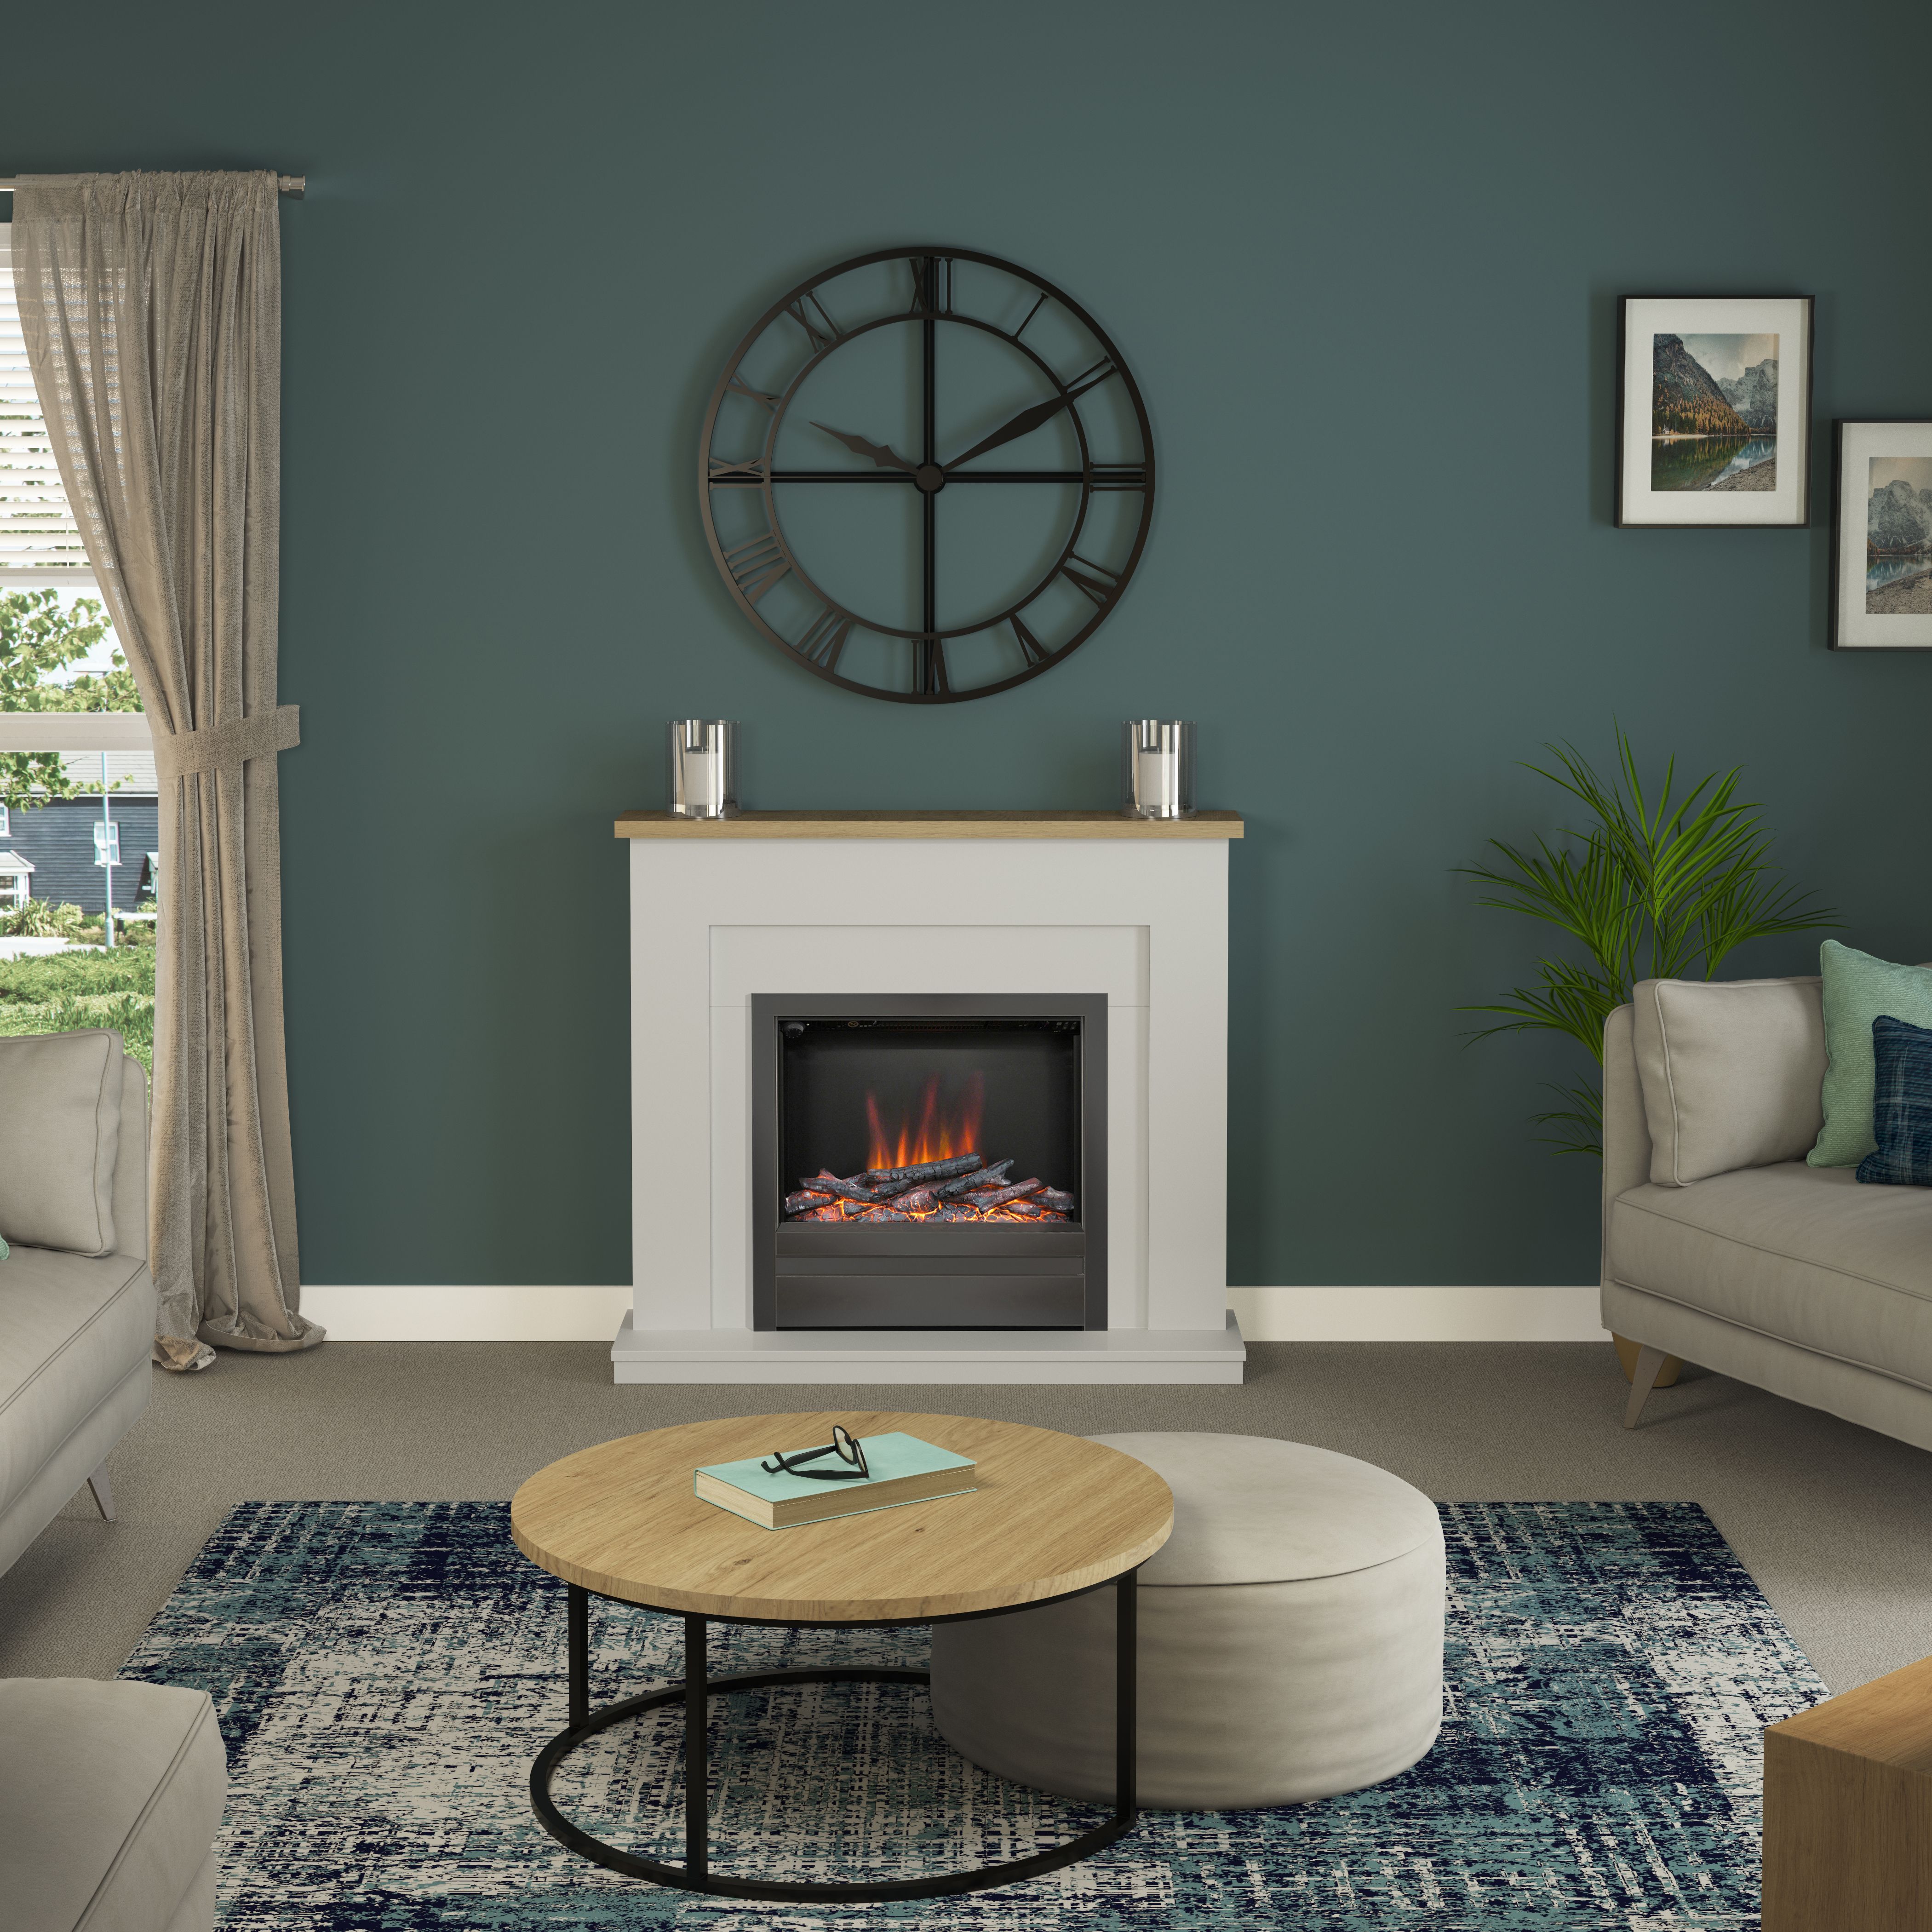 Be Modern Alder Light grey & oak Inset Electric Fire suite